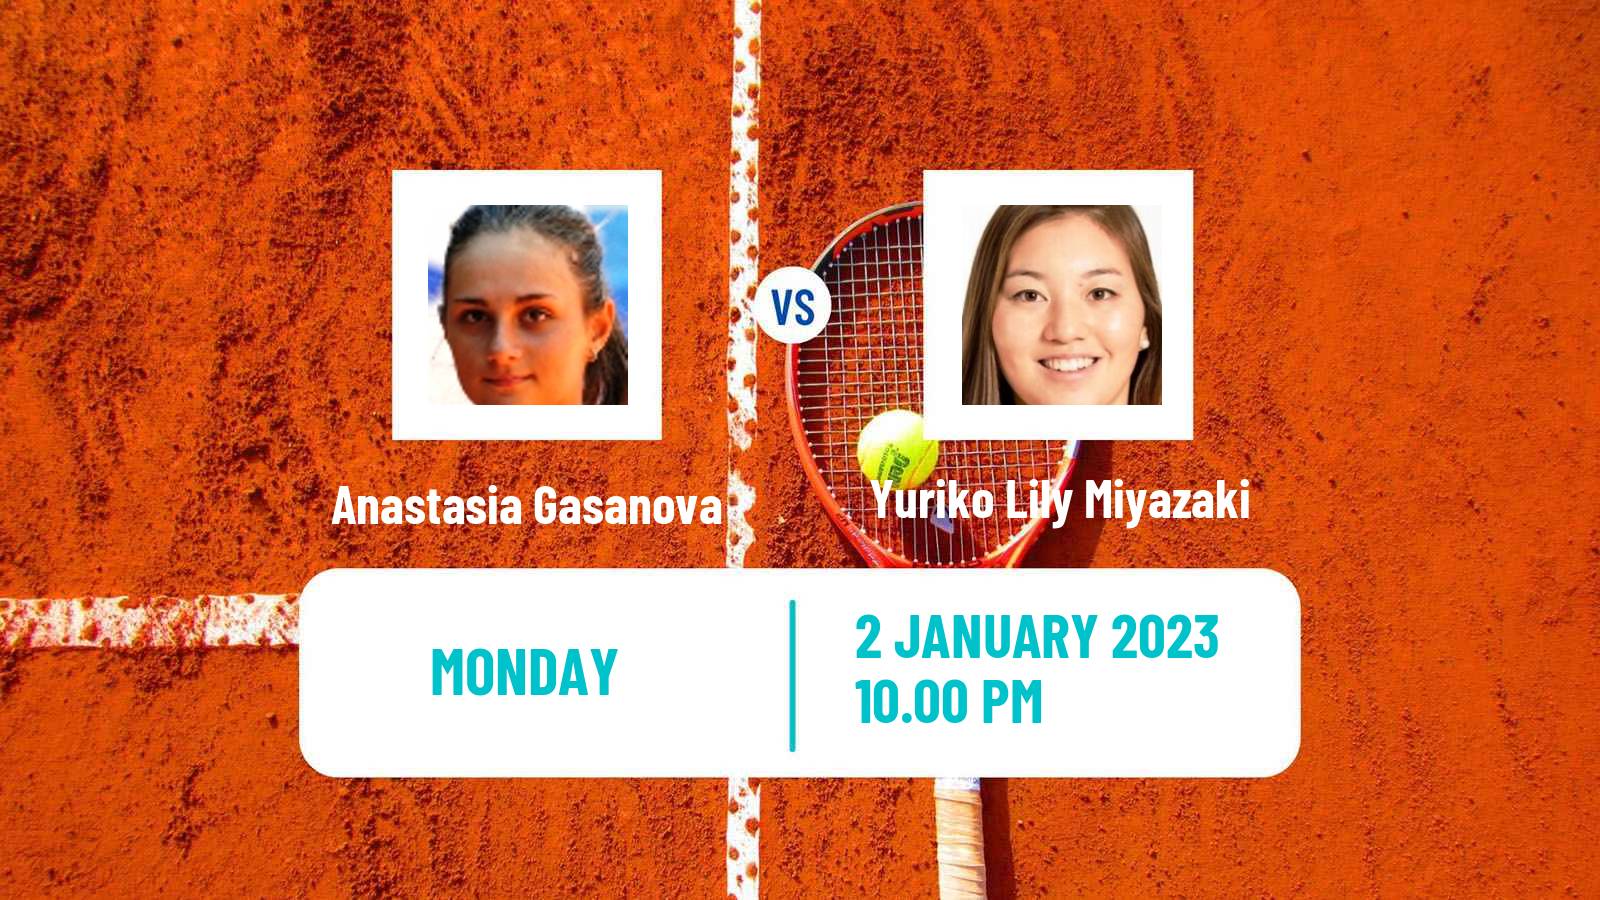 Tennis ITF Tournaments Anastasia Gasanova - Yuriko Lily Miyazaki